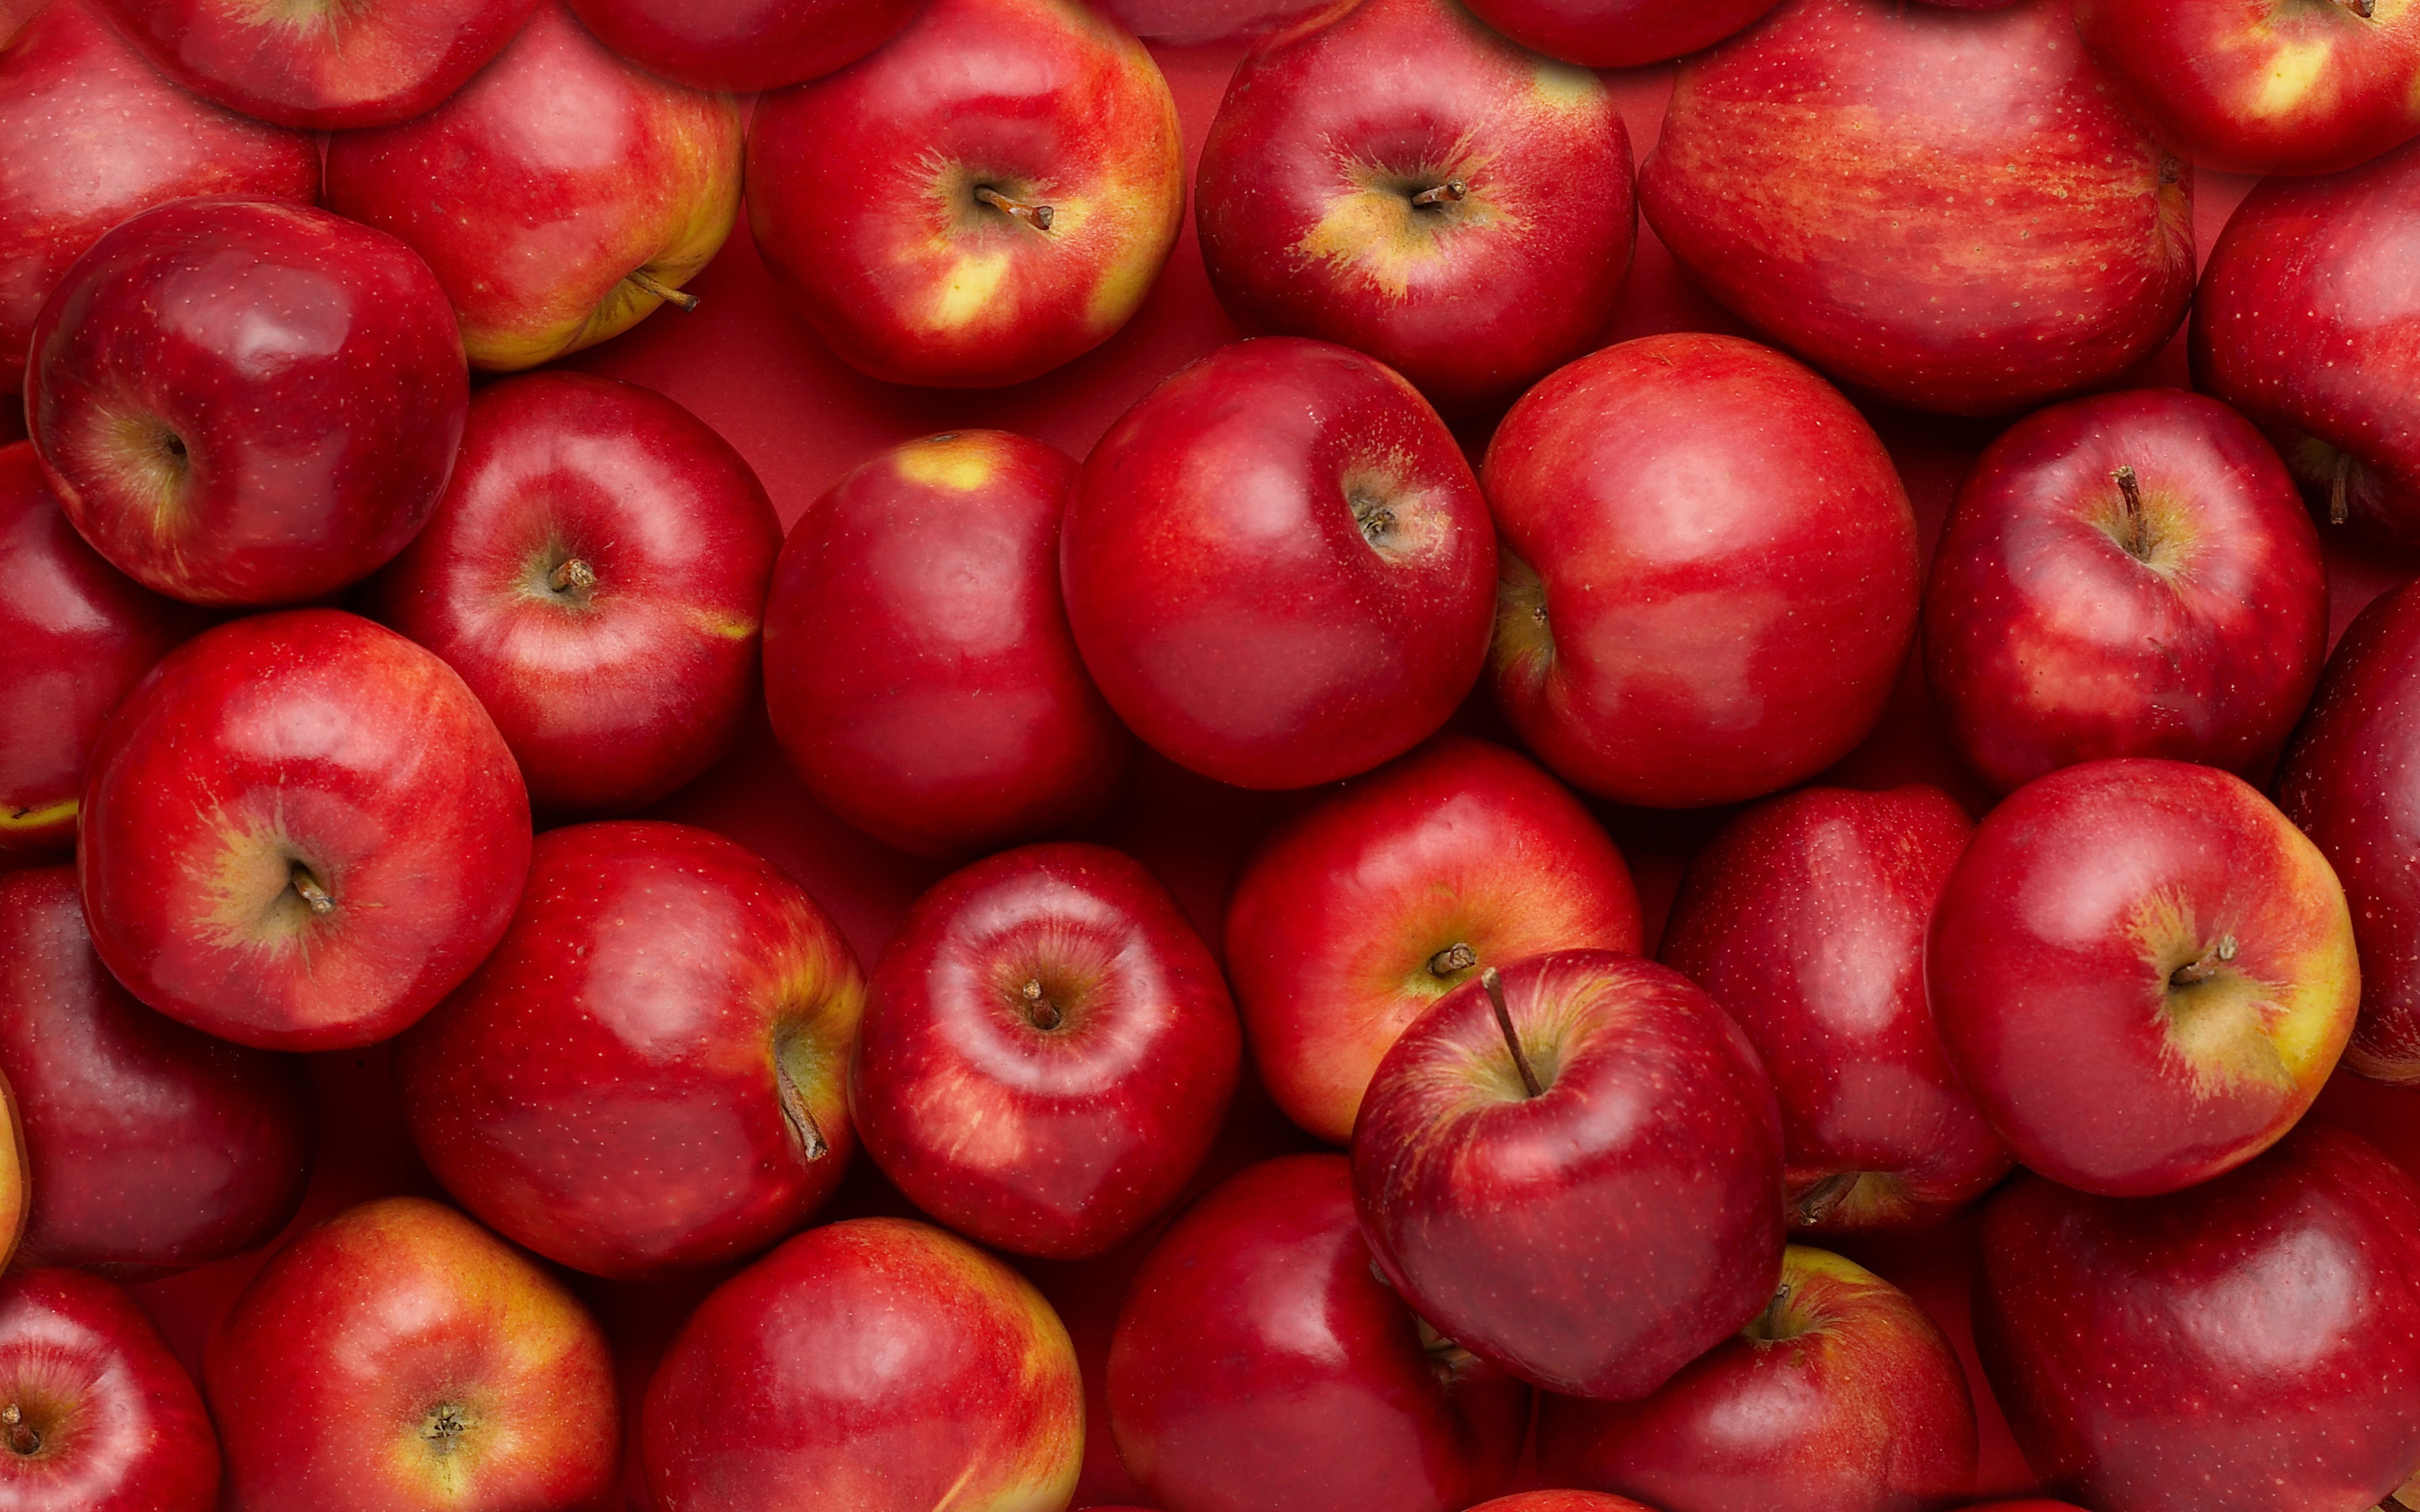 Wallpaper of apples